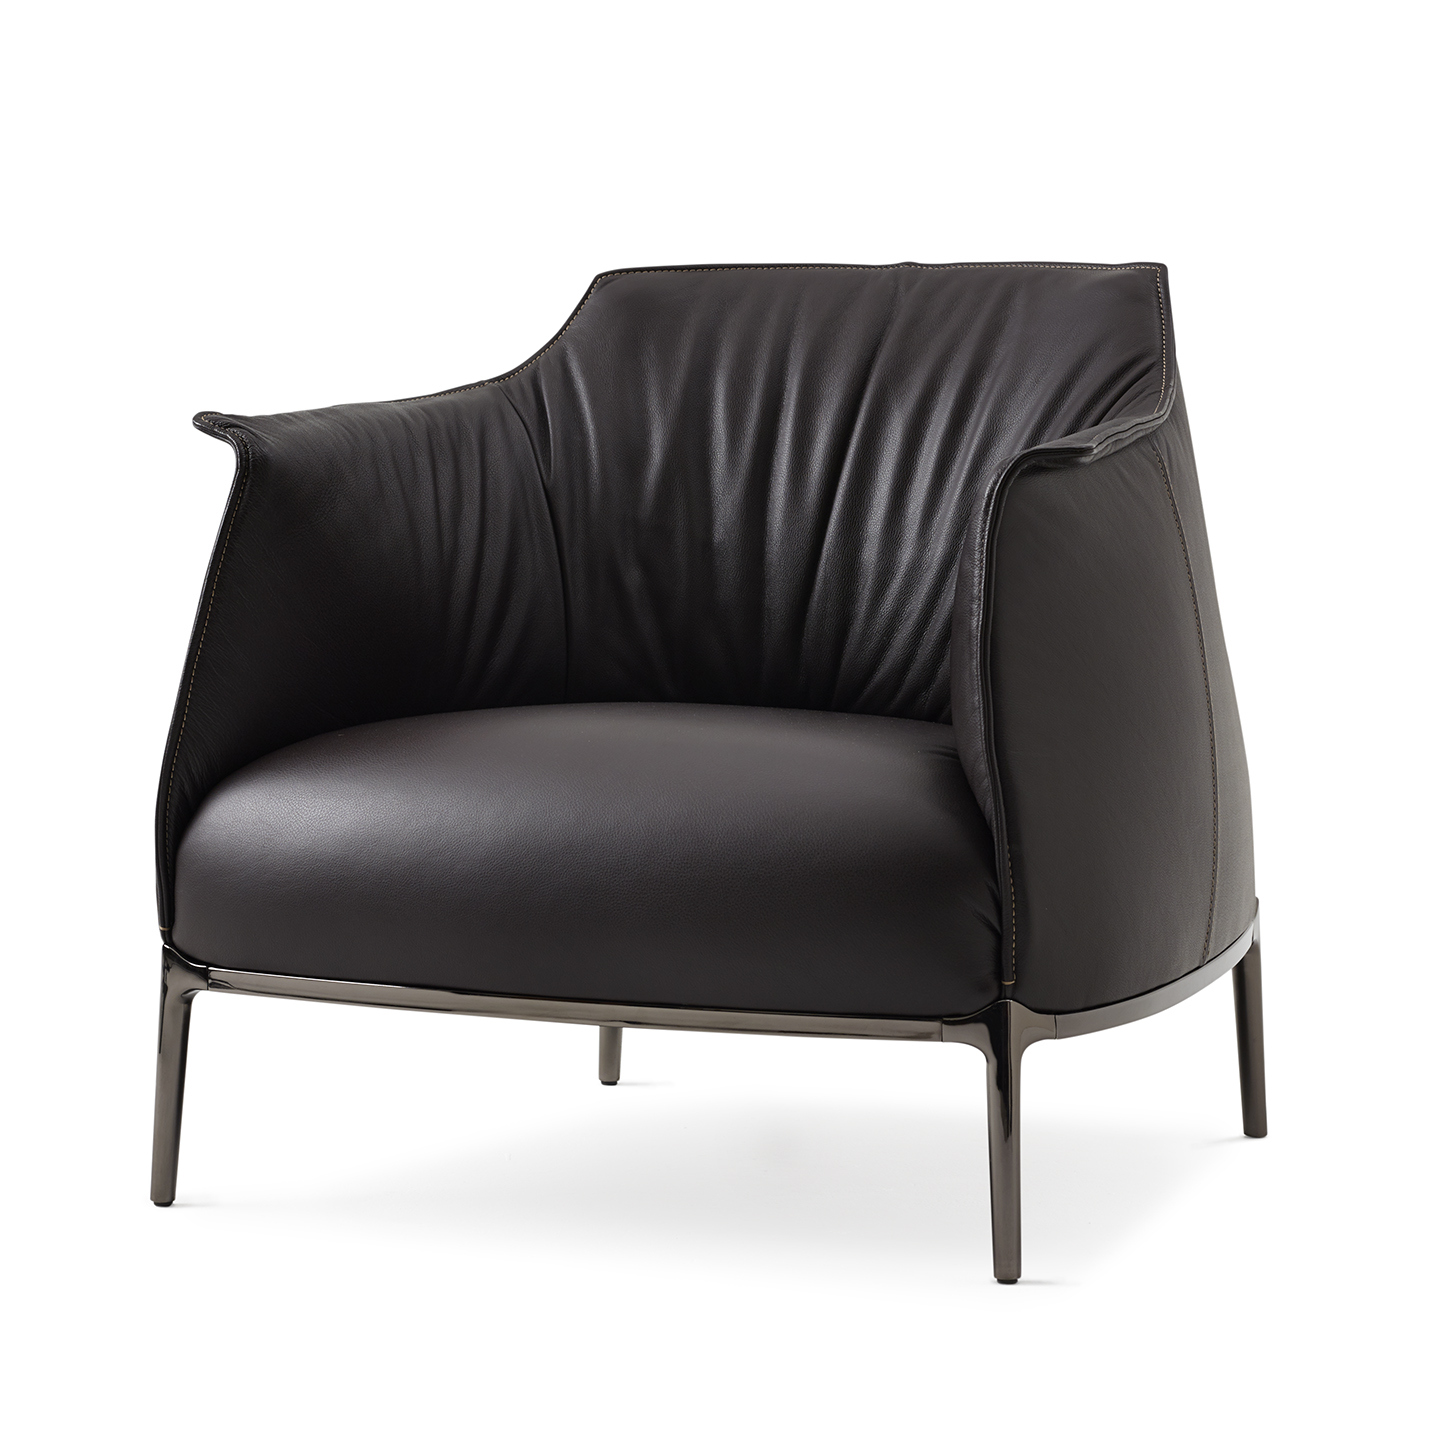 Haworth Archibald lounge chair in dark brown leather.